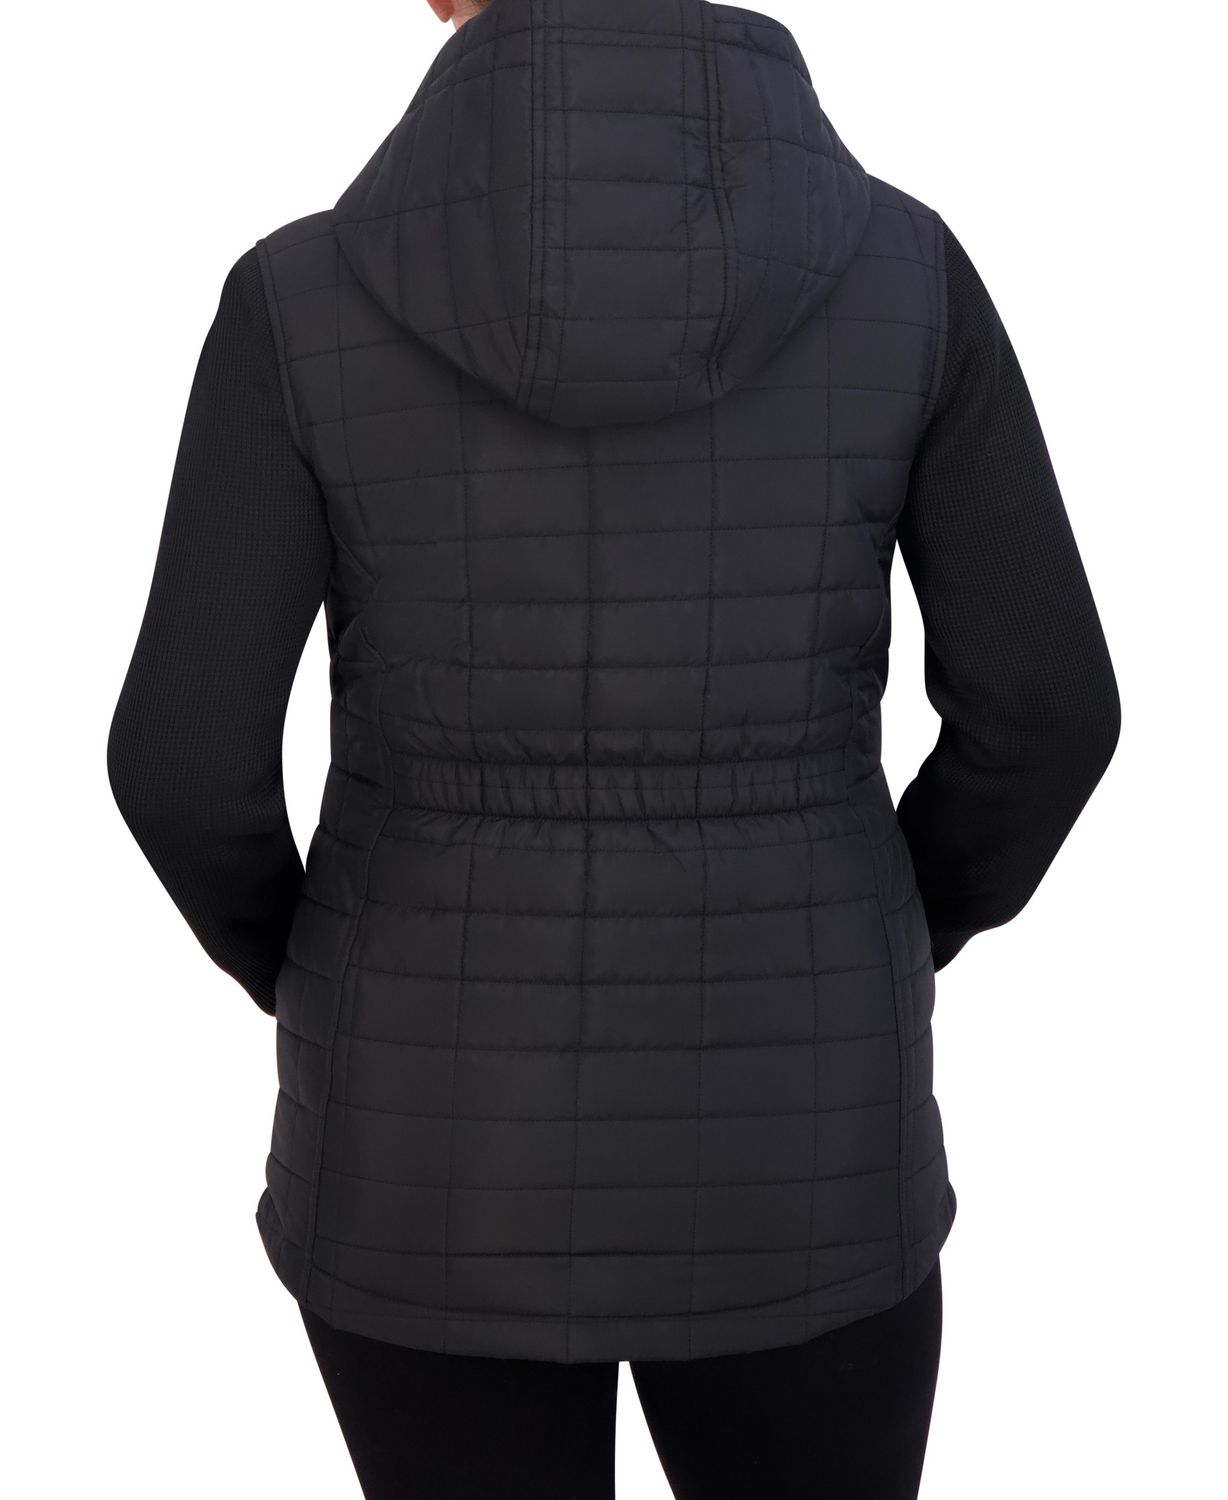 Reebok Women's Spyder Softshell Jacket 